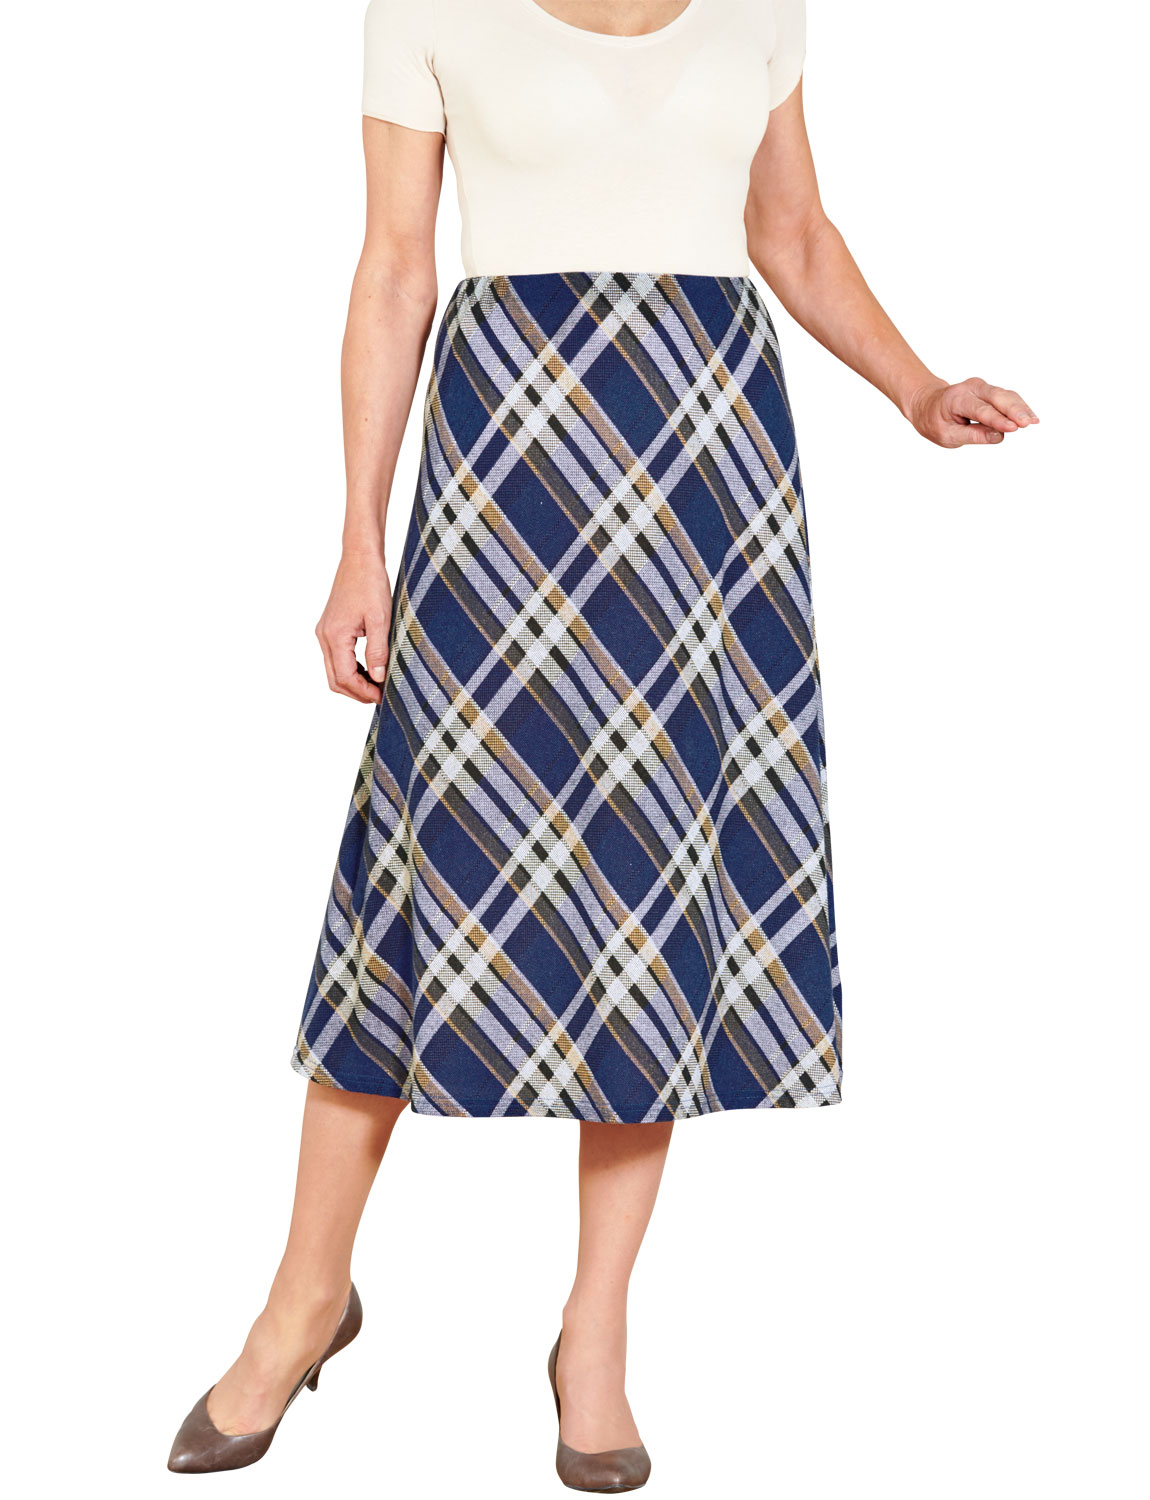 Ladies Warm Handle Skirt Length 25 Inches | eBay